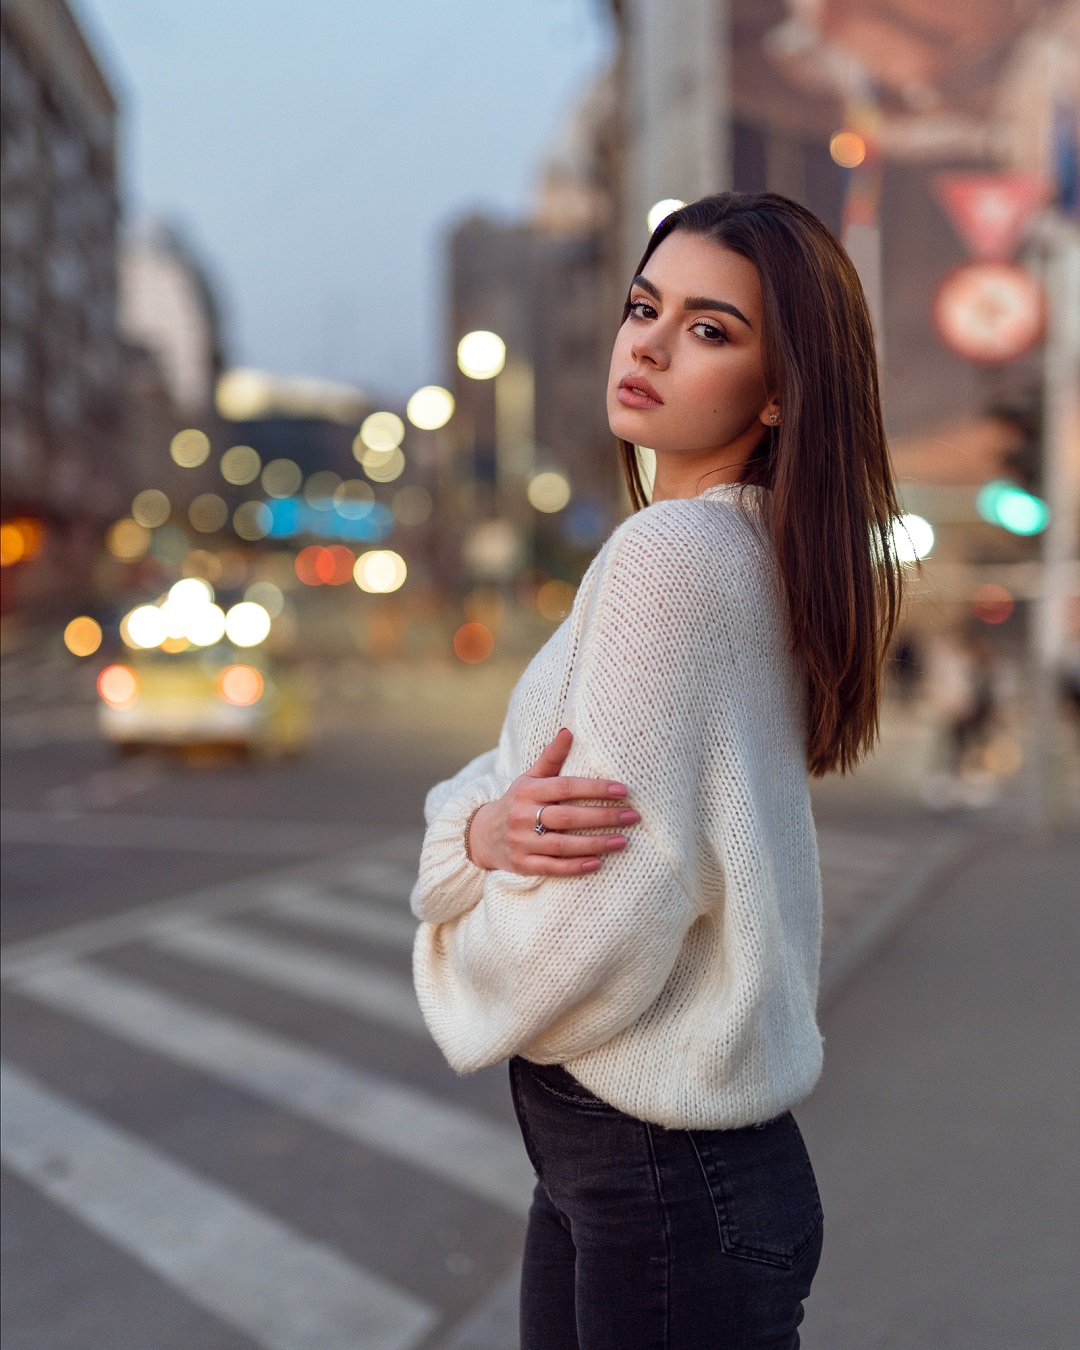 Andrei Marginean Women Model Alexandra Moraru Women Outdoors Public White Sweater Black Pants Arms C 1080x1350